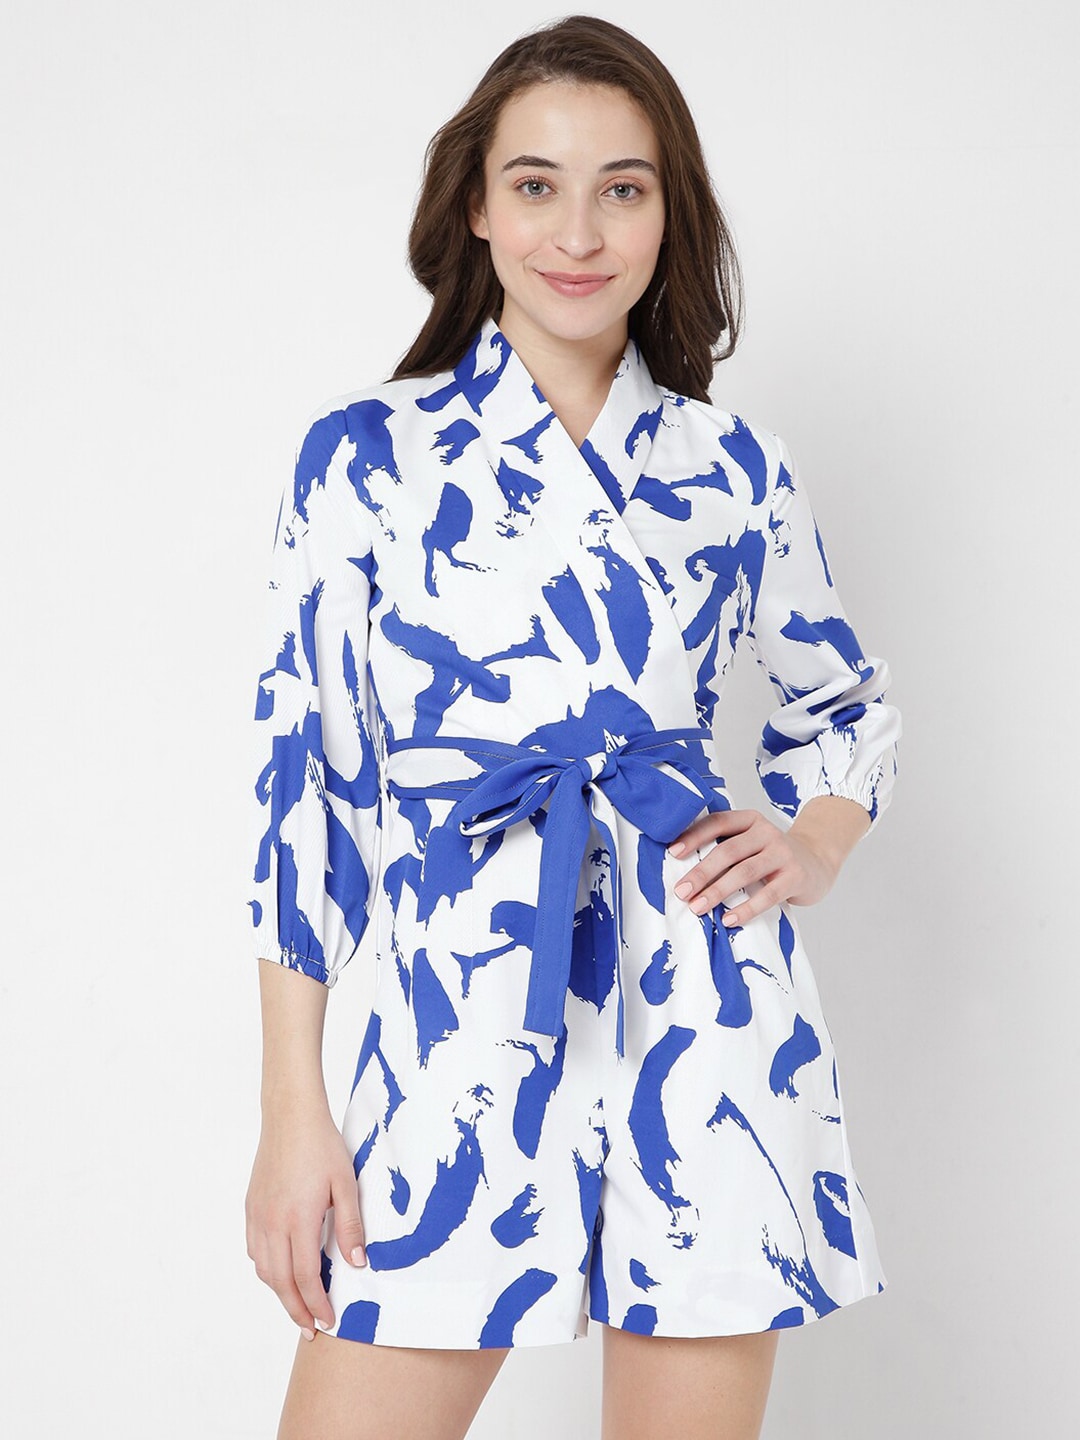 Vero Moda White & Blue Printed Jumpsuit Price in India